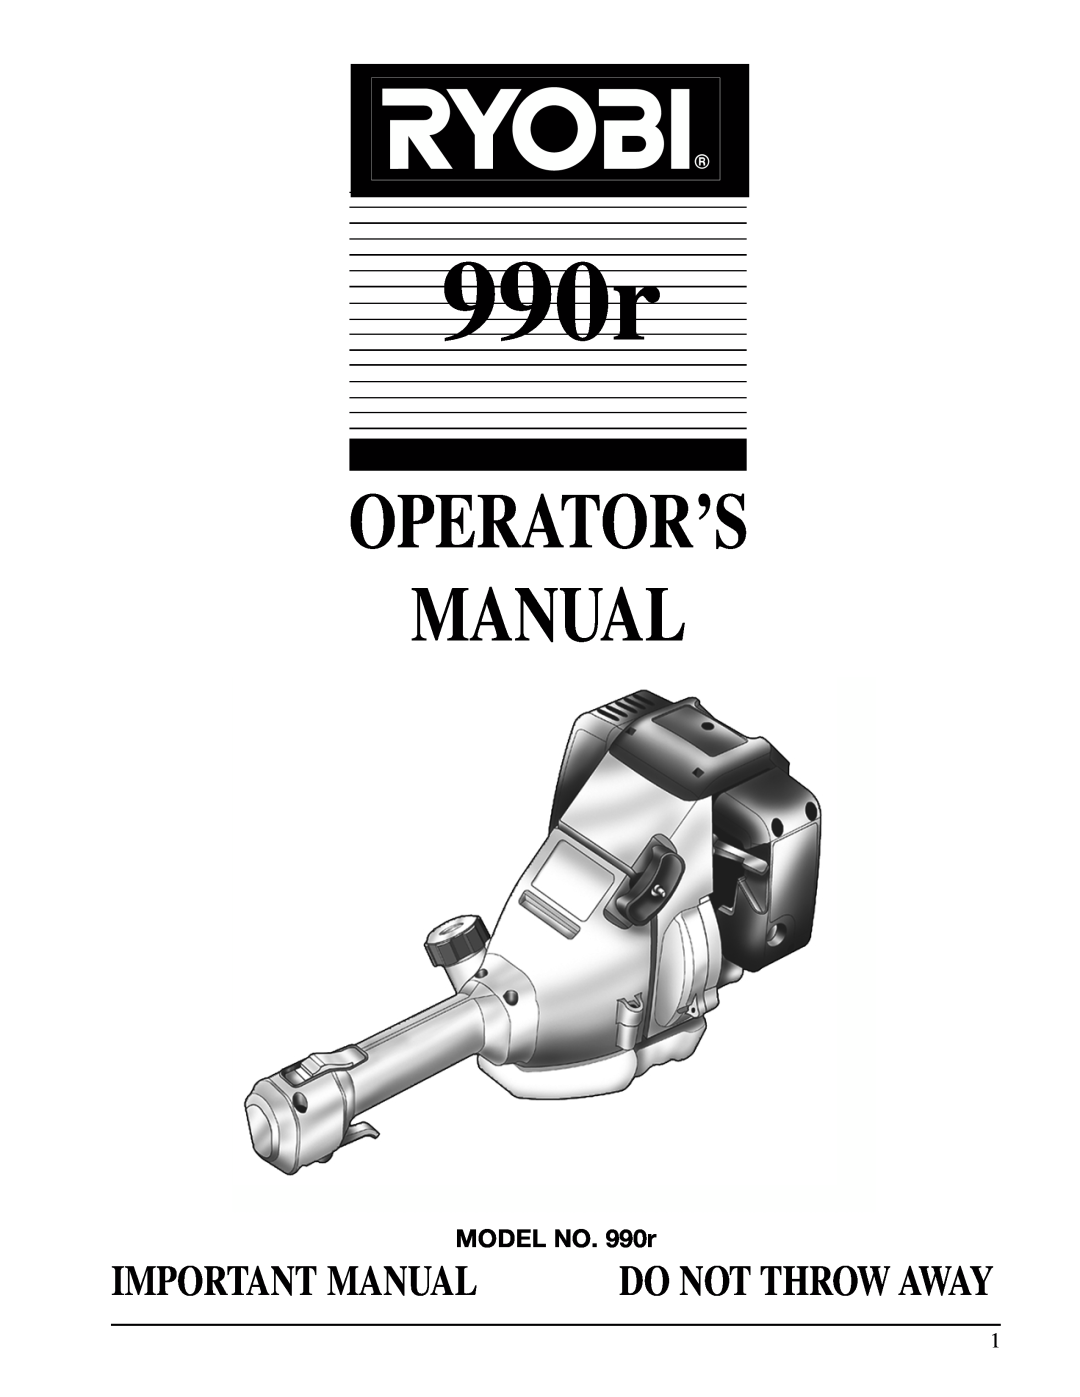 Ryobi manual MODEL NO. 990r, Operator’S Manual, Important Manual, Do Not Throw Away 